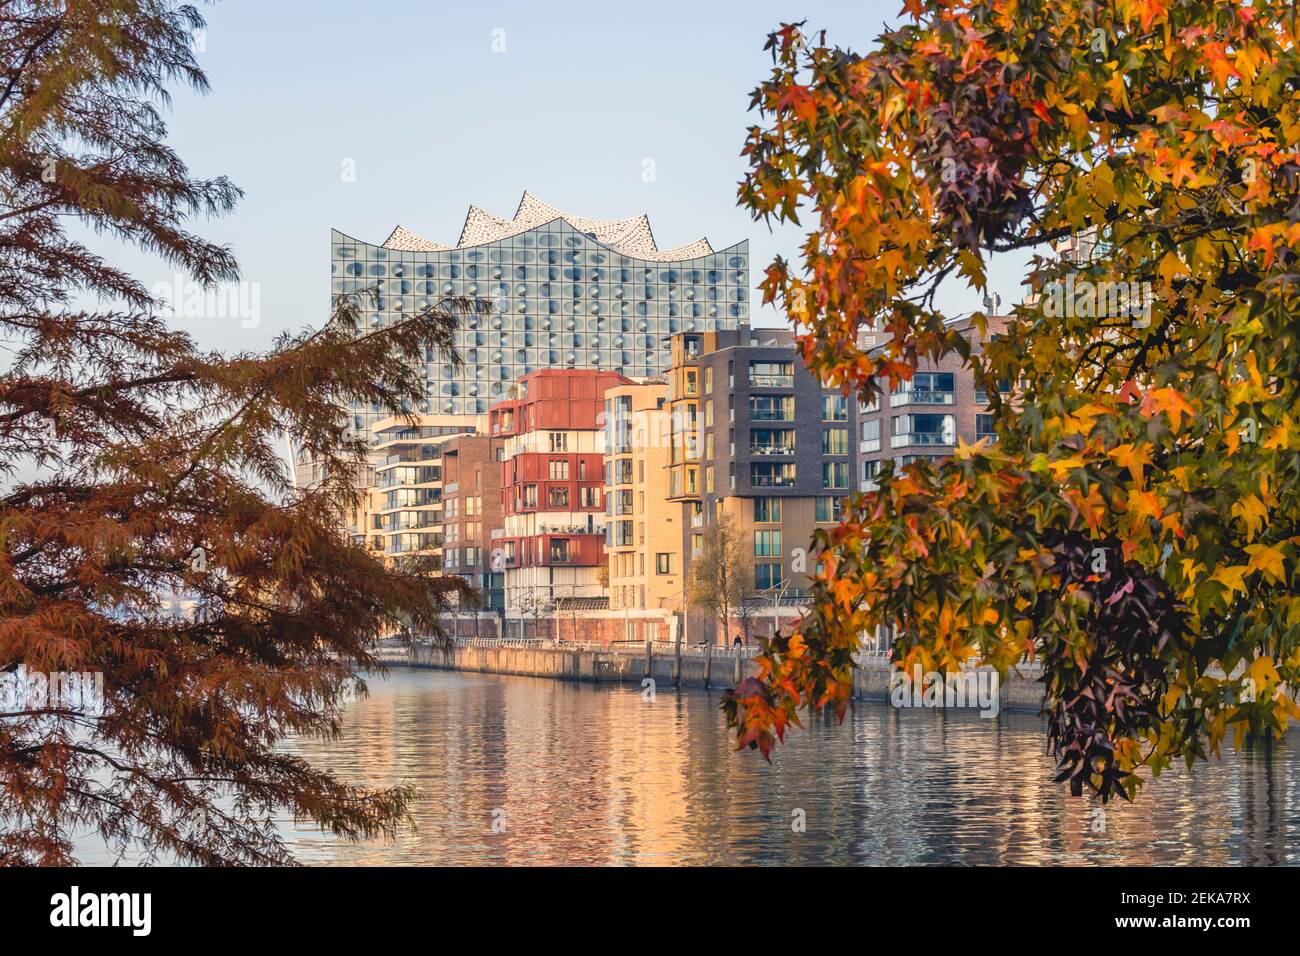 Germany, Hamburg, HafenCity with Sandtorhafen river and Elbphilharmonie concert venue in autumn Stock Photo